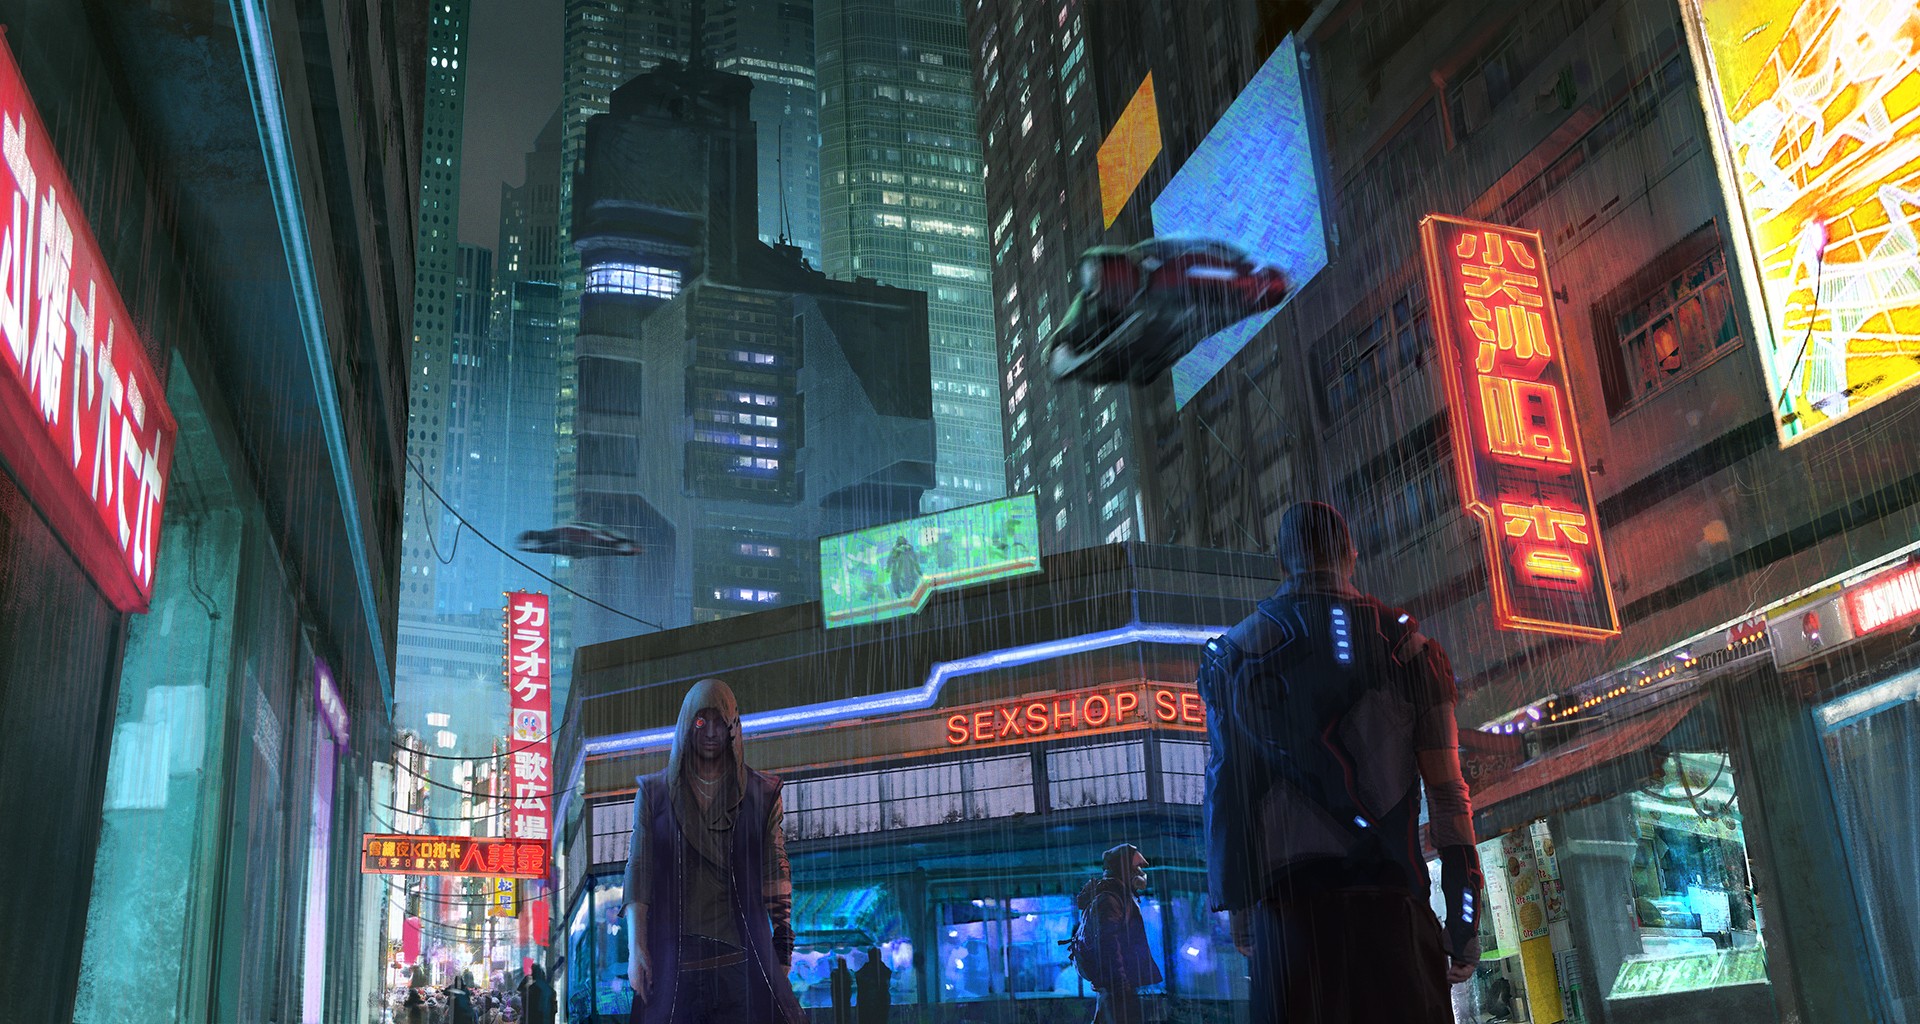 General 1920x1024 cyberpunk futuristic neon science fiction urban futuristic city